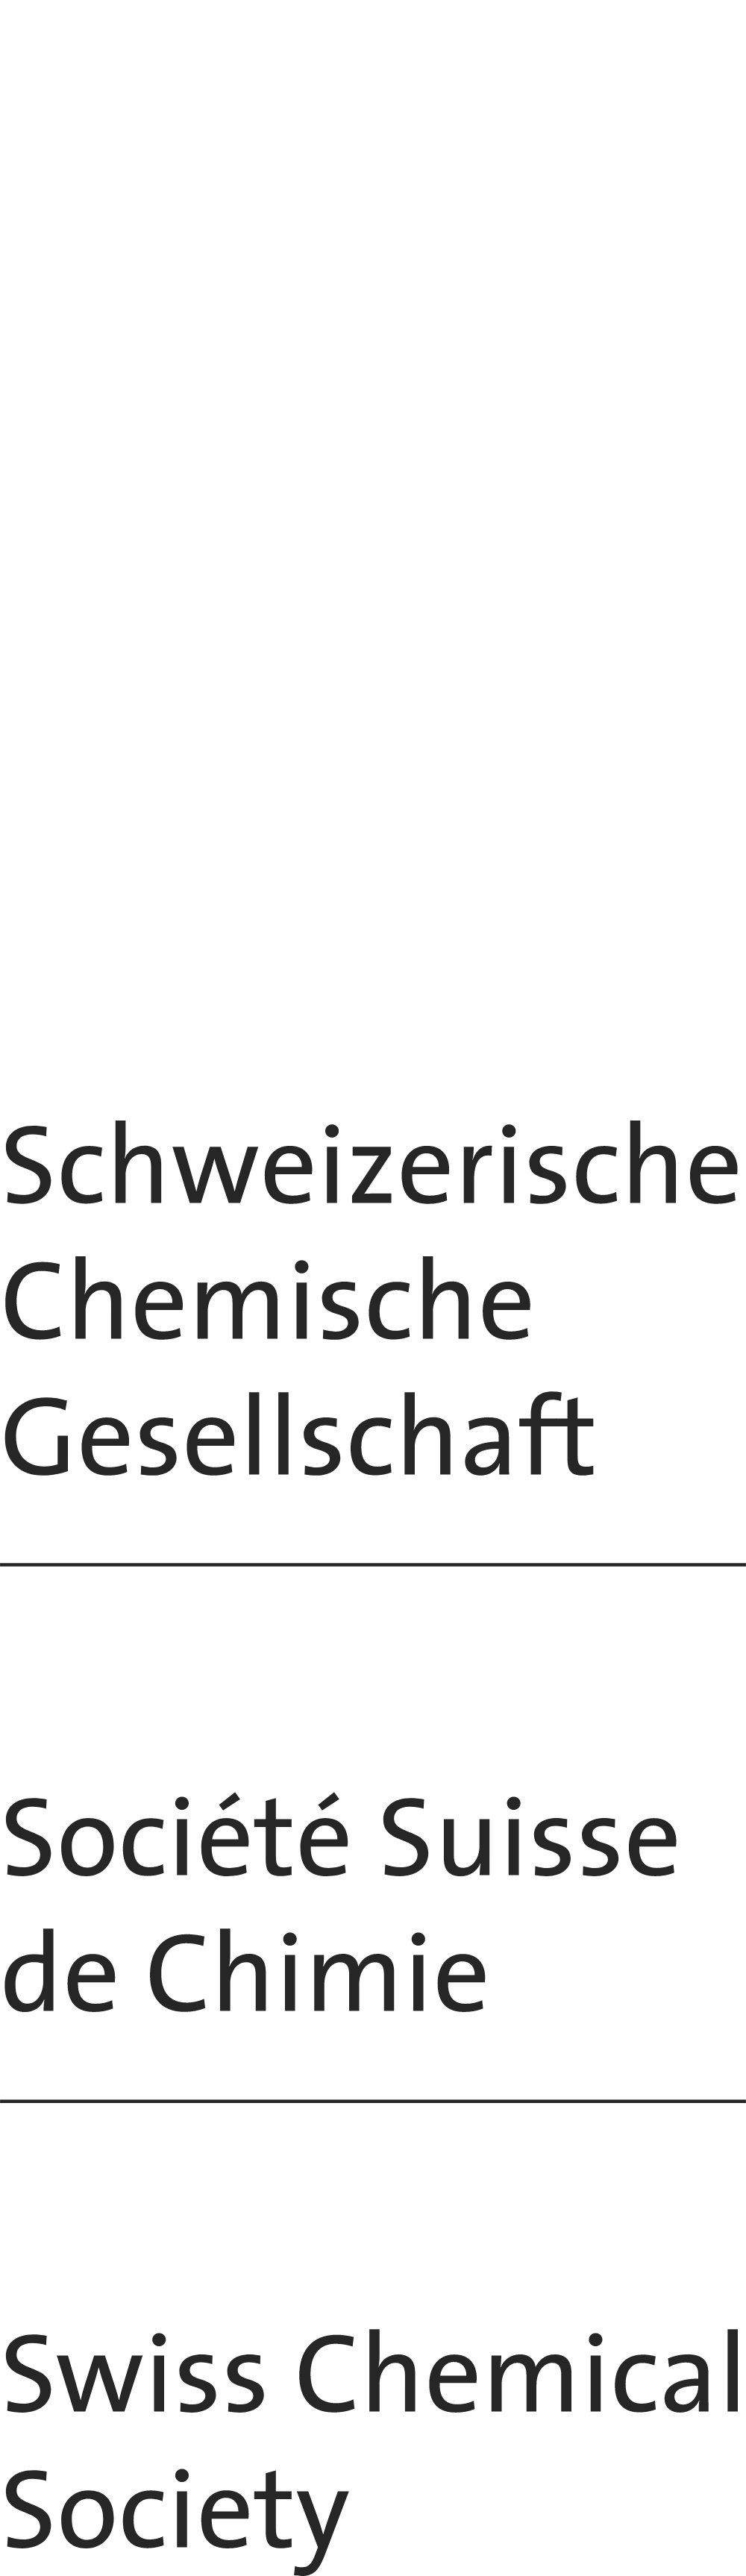 Swiss Chemical Society (SCS) Logo Logos